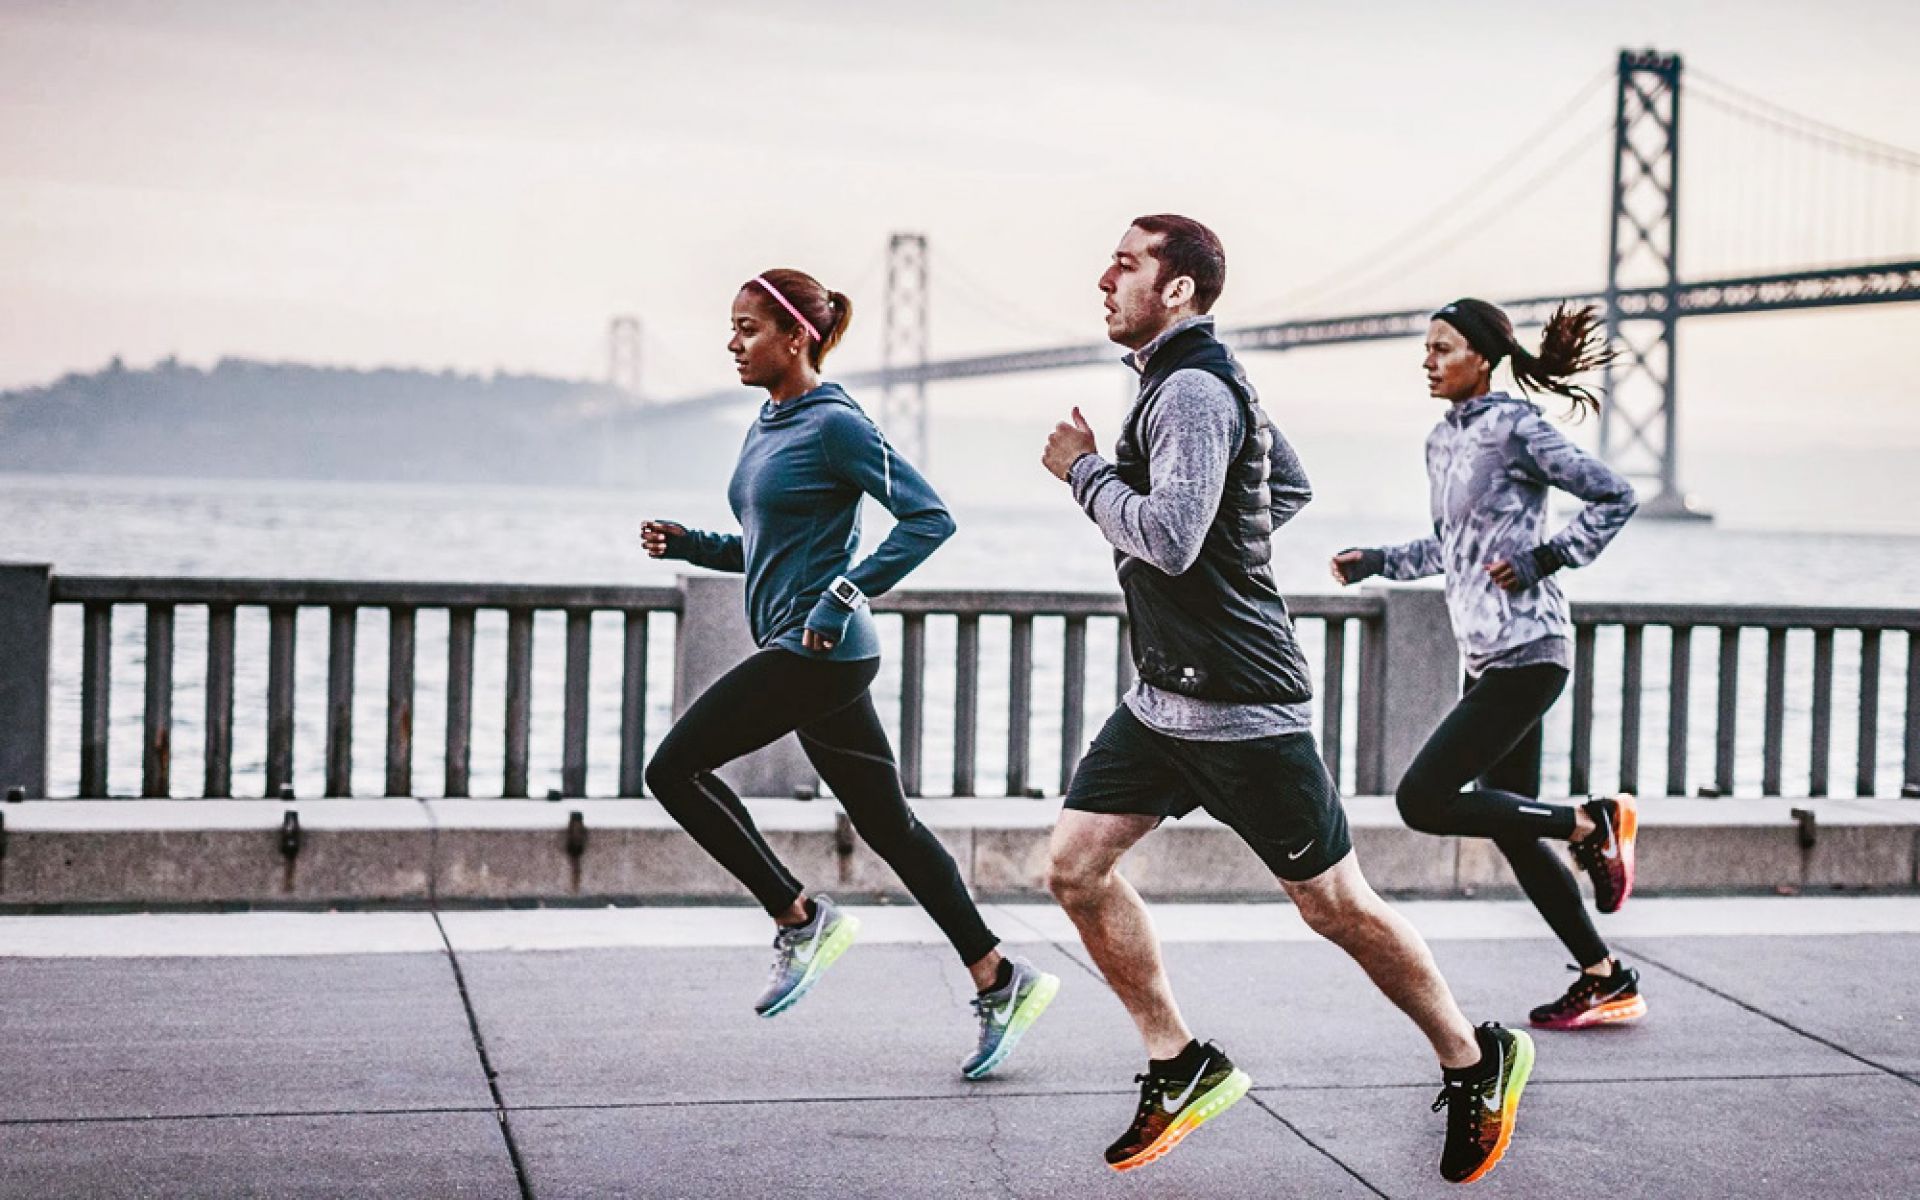 Movement start. Nike Running. Nike Running бег. Занятие спортом. Стильный спортивный образ.